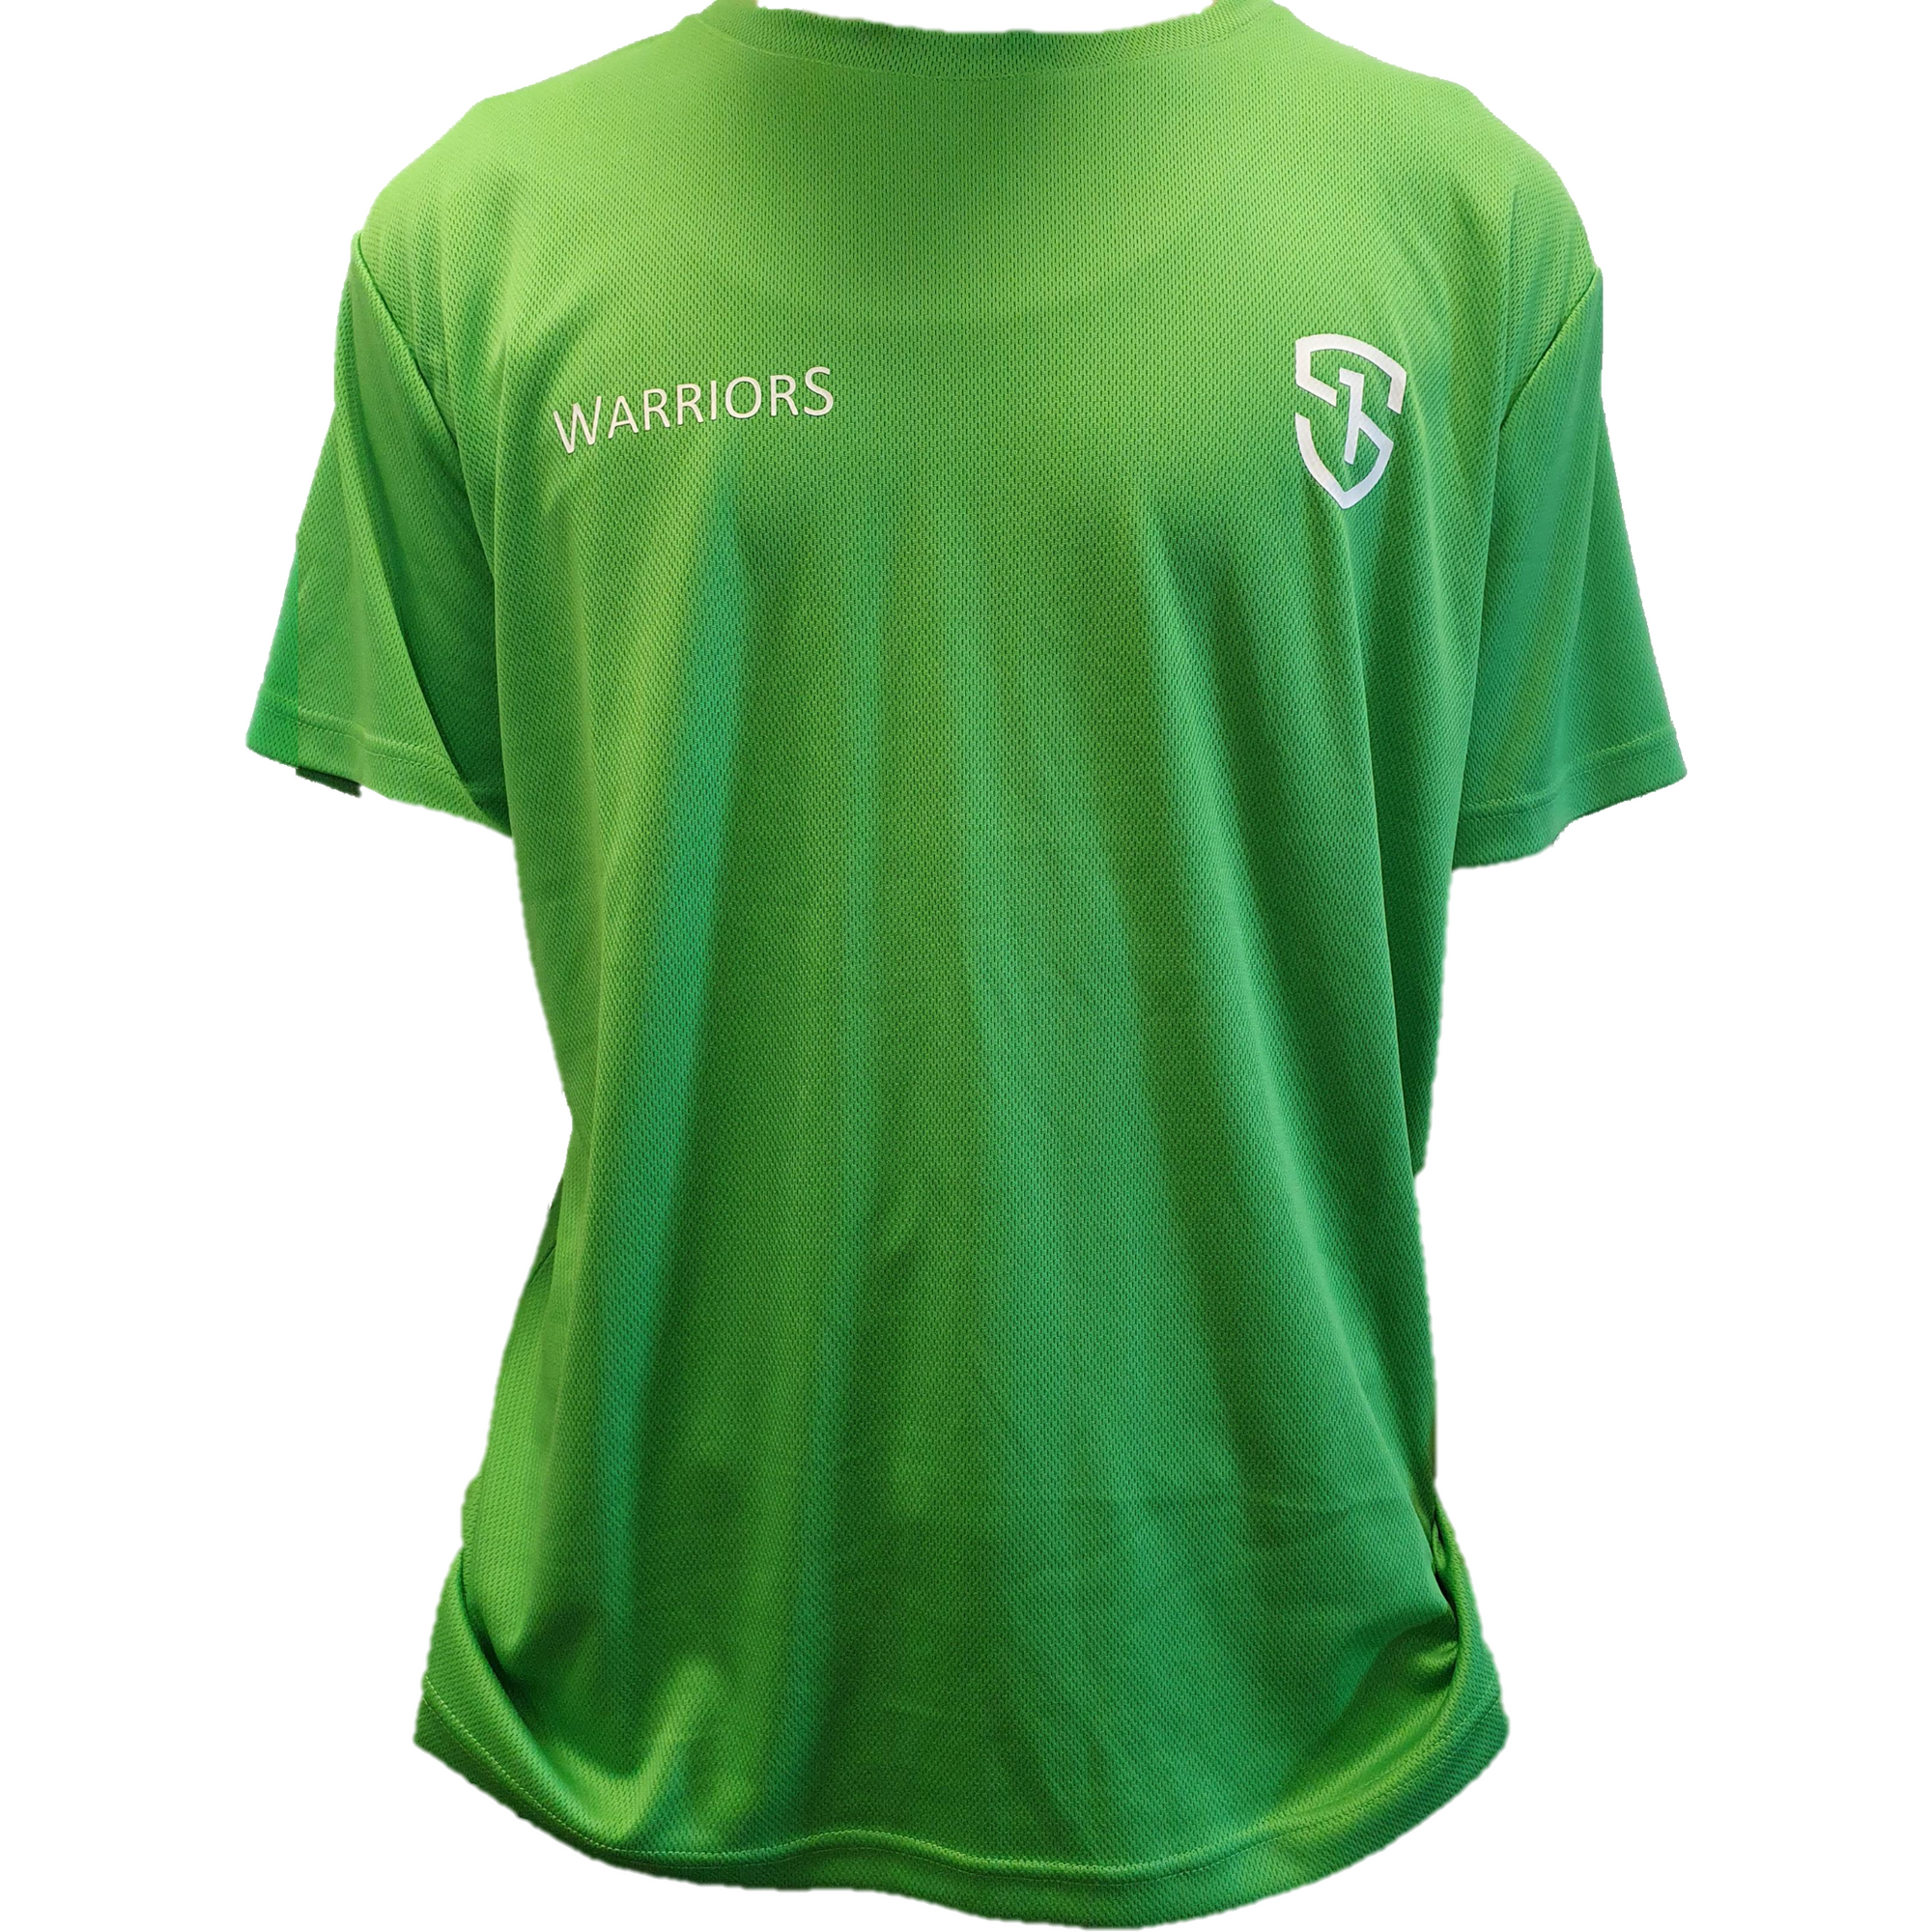 House Team Sports T-shirt Green Size 12